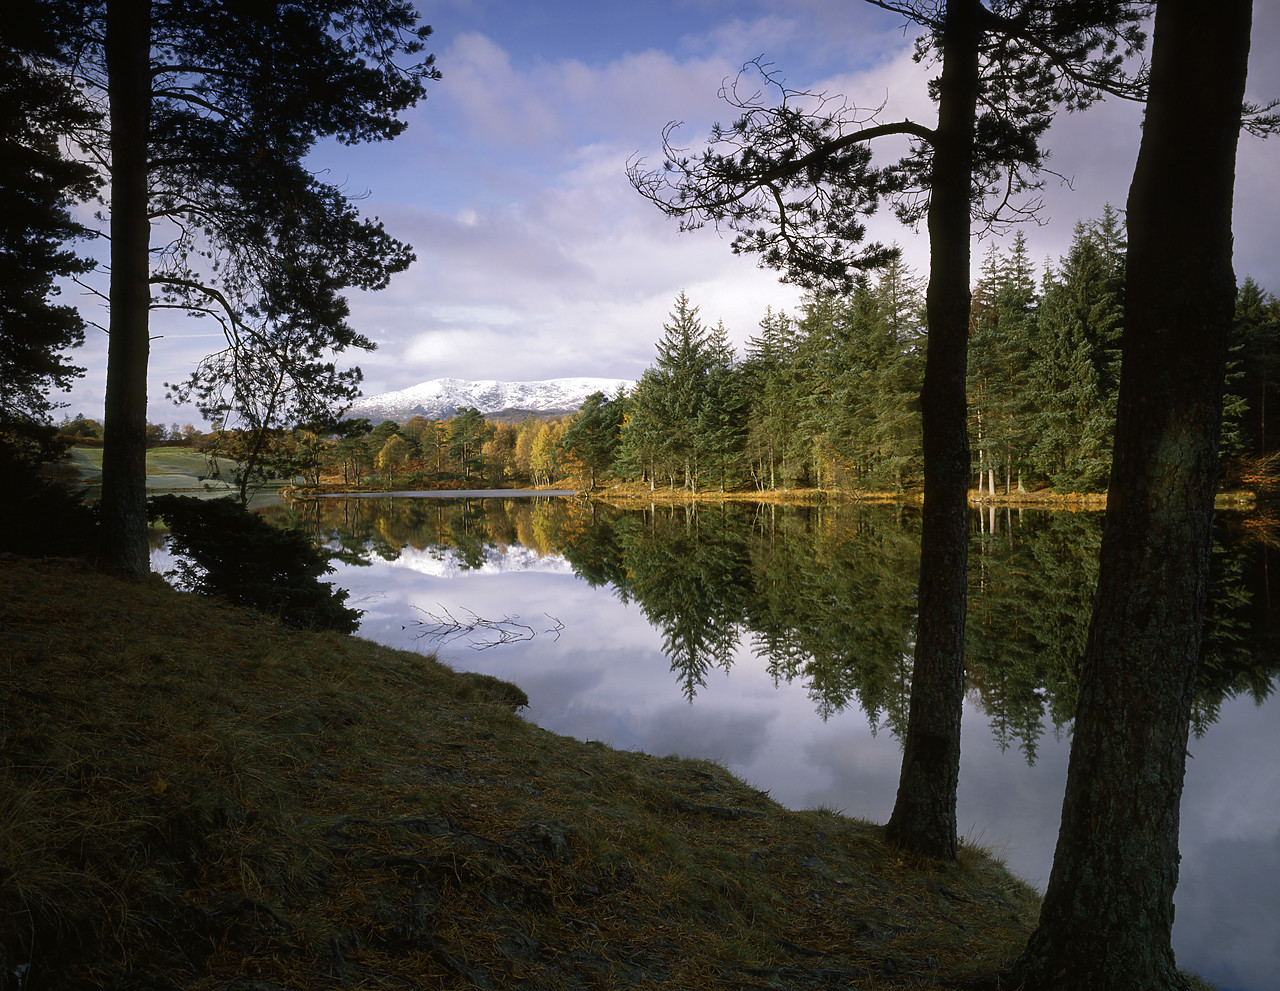 #924148-1 - Tarn Hows, Lake District National Park, Cumbria, England